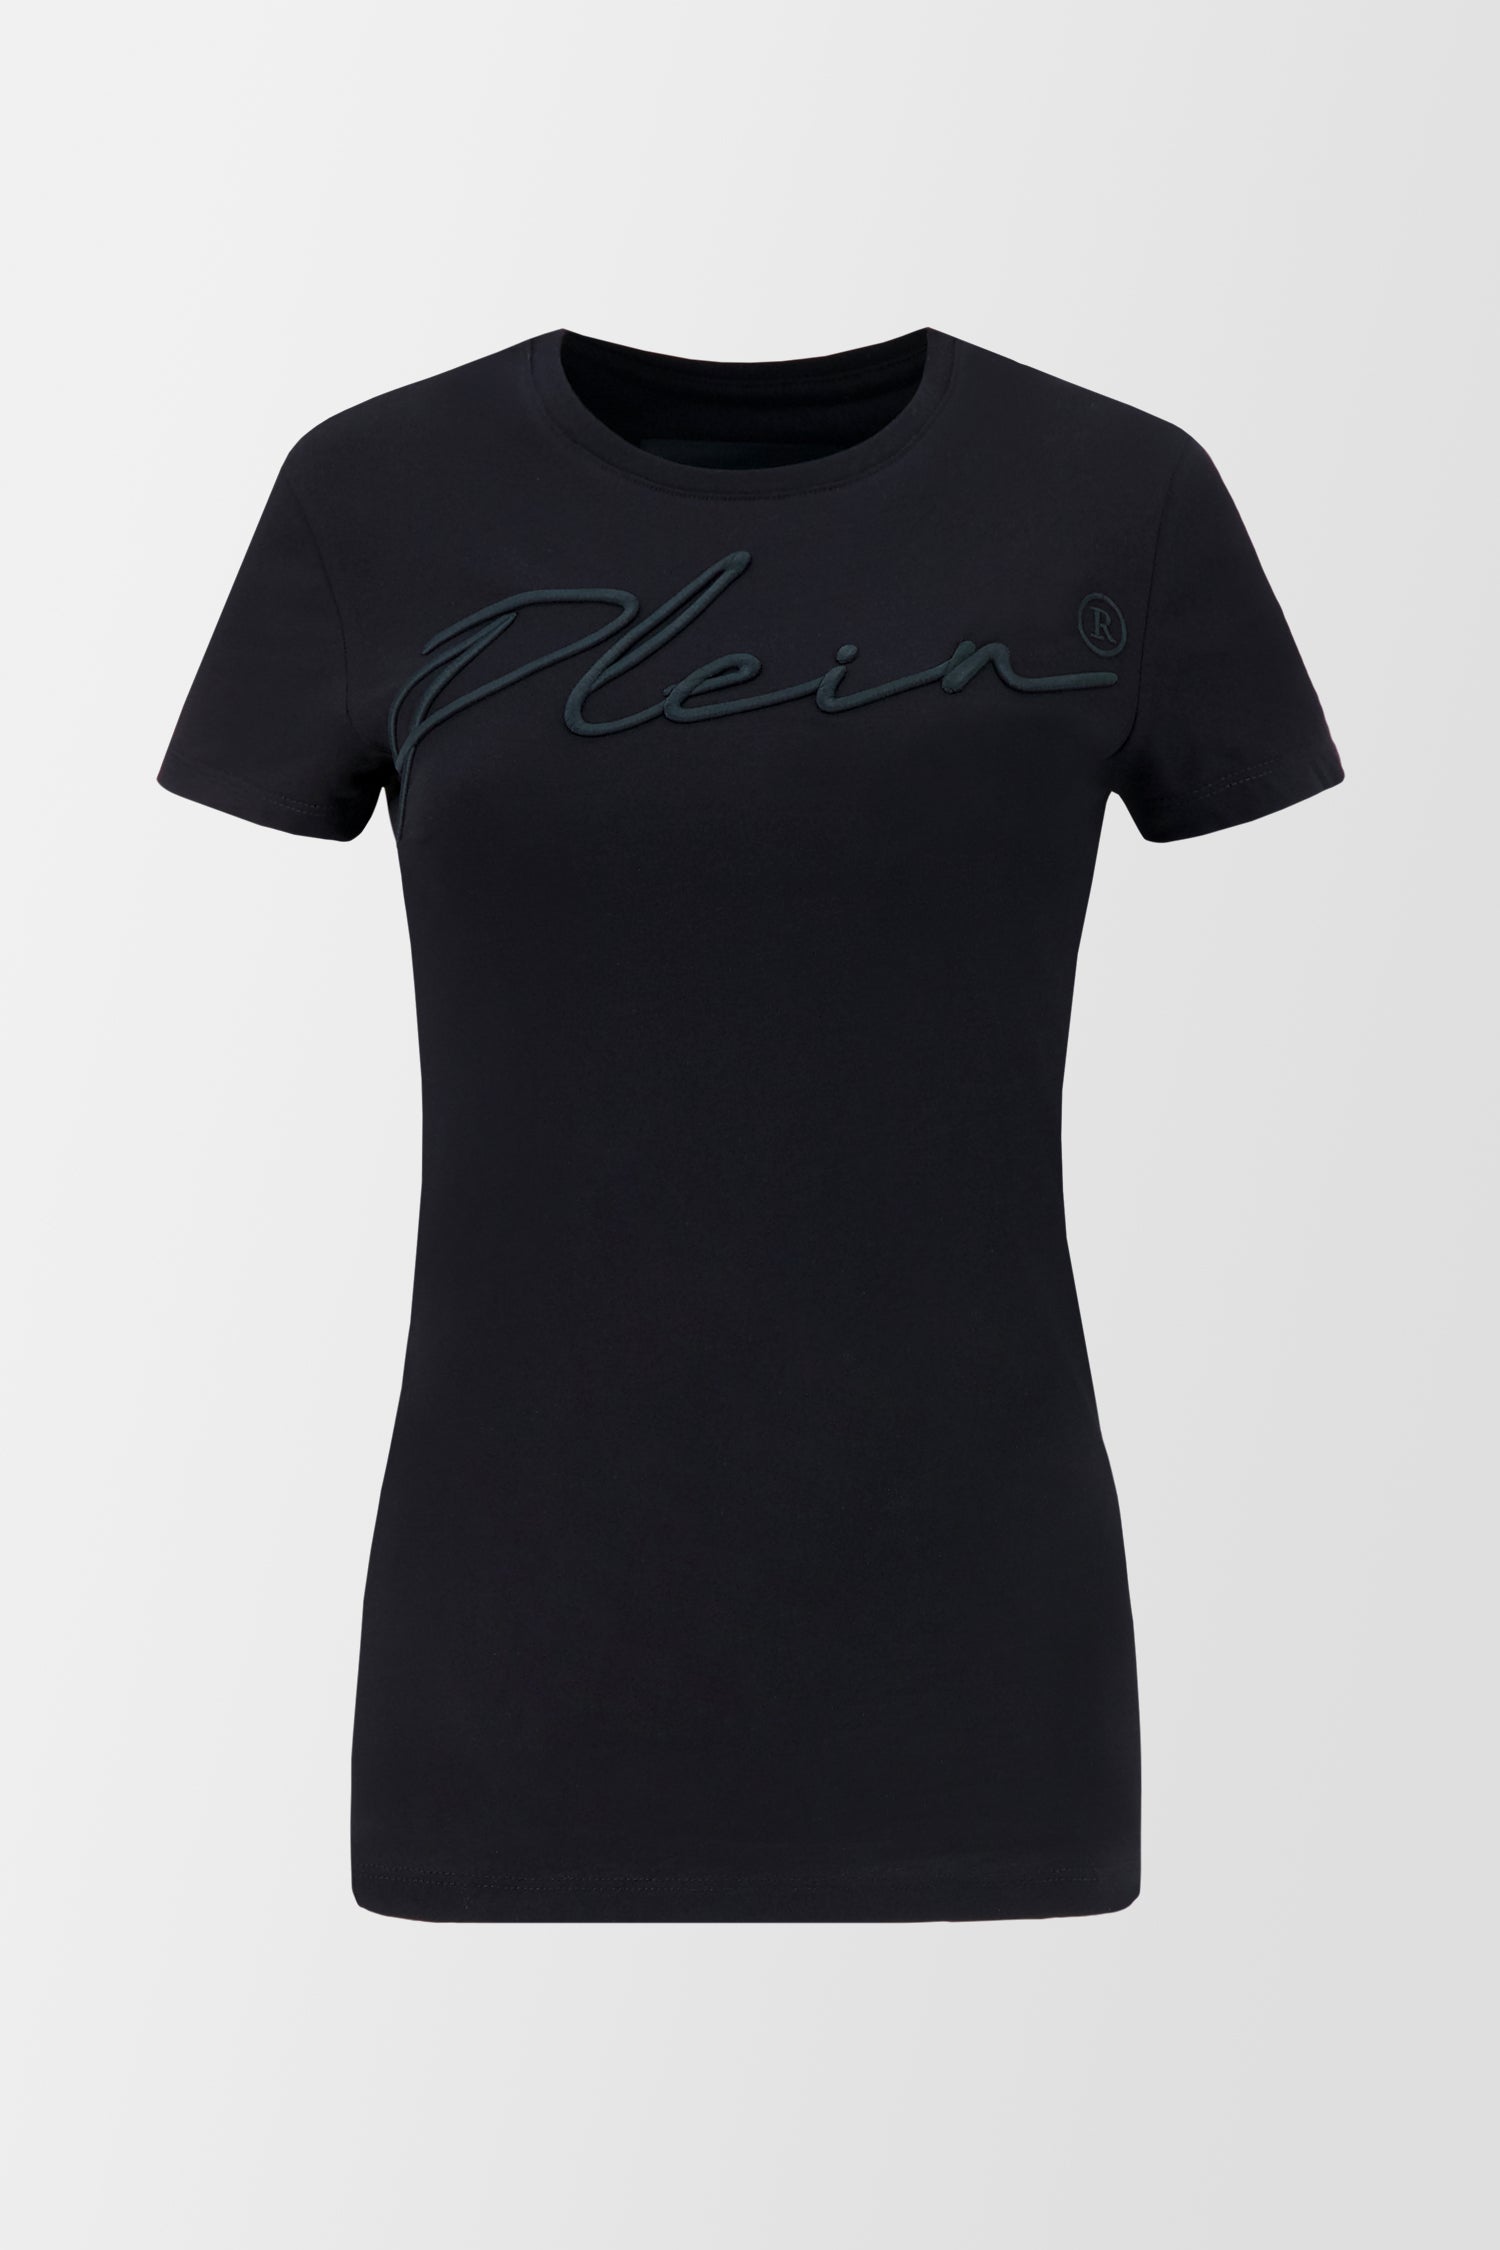 Philipp Plein Black Satin Embroidery Signature T-Shirt